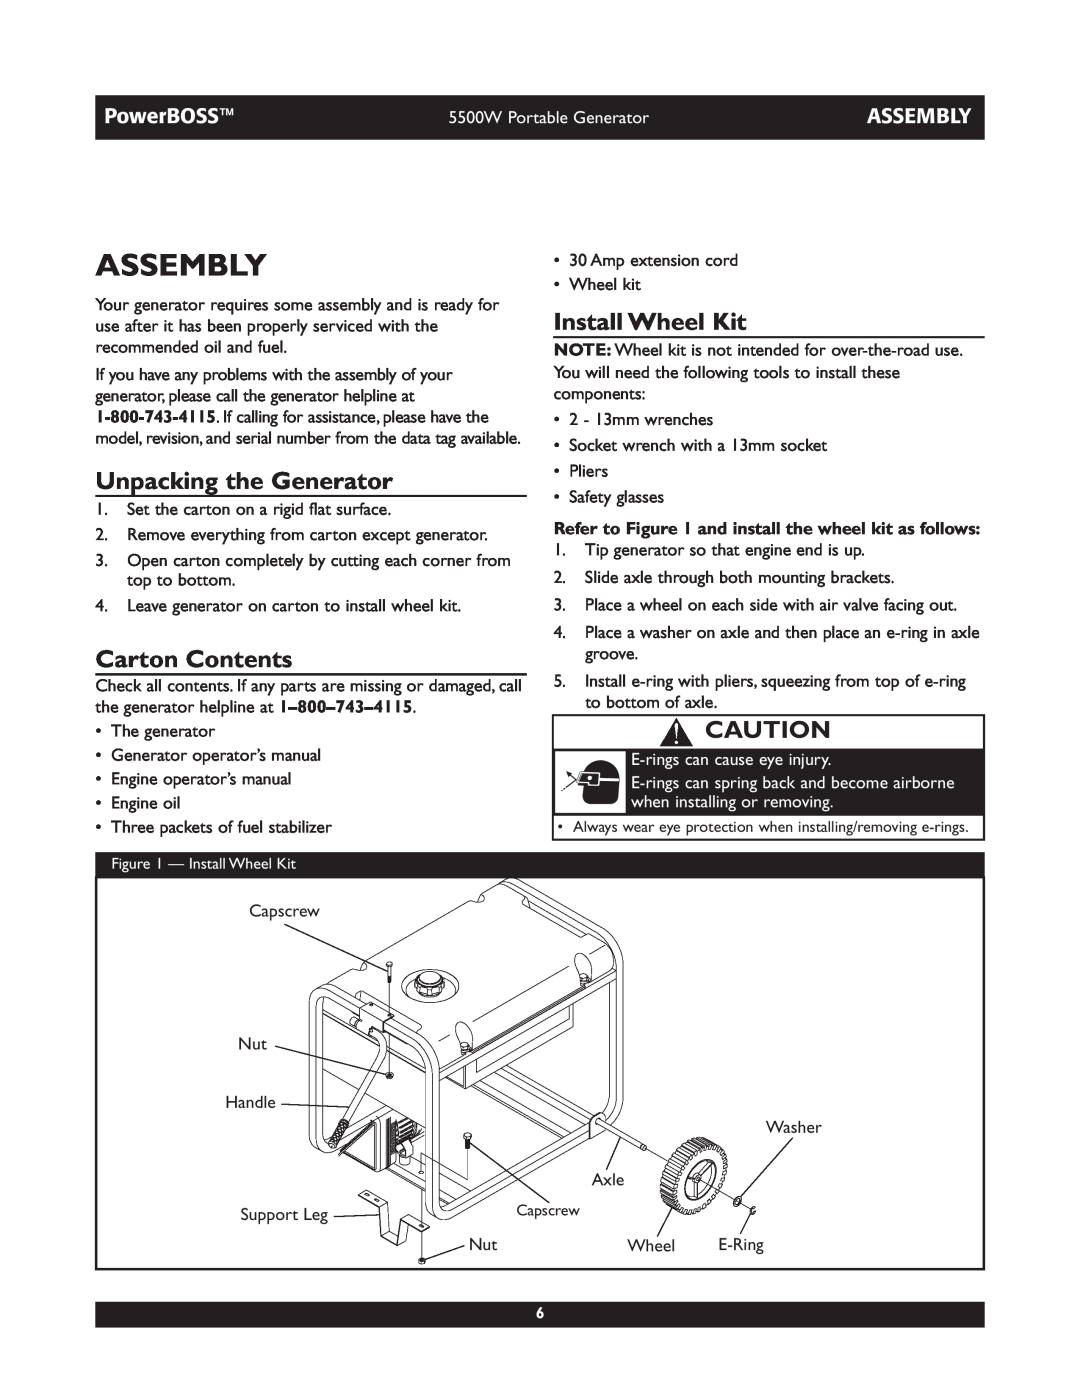 Briggs & Stratton 030249, 030255 manual Assembly, Unpacking the Generator, Carton Contents, Install Wheel Kit, PowerBOSS 